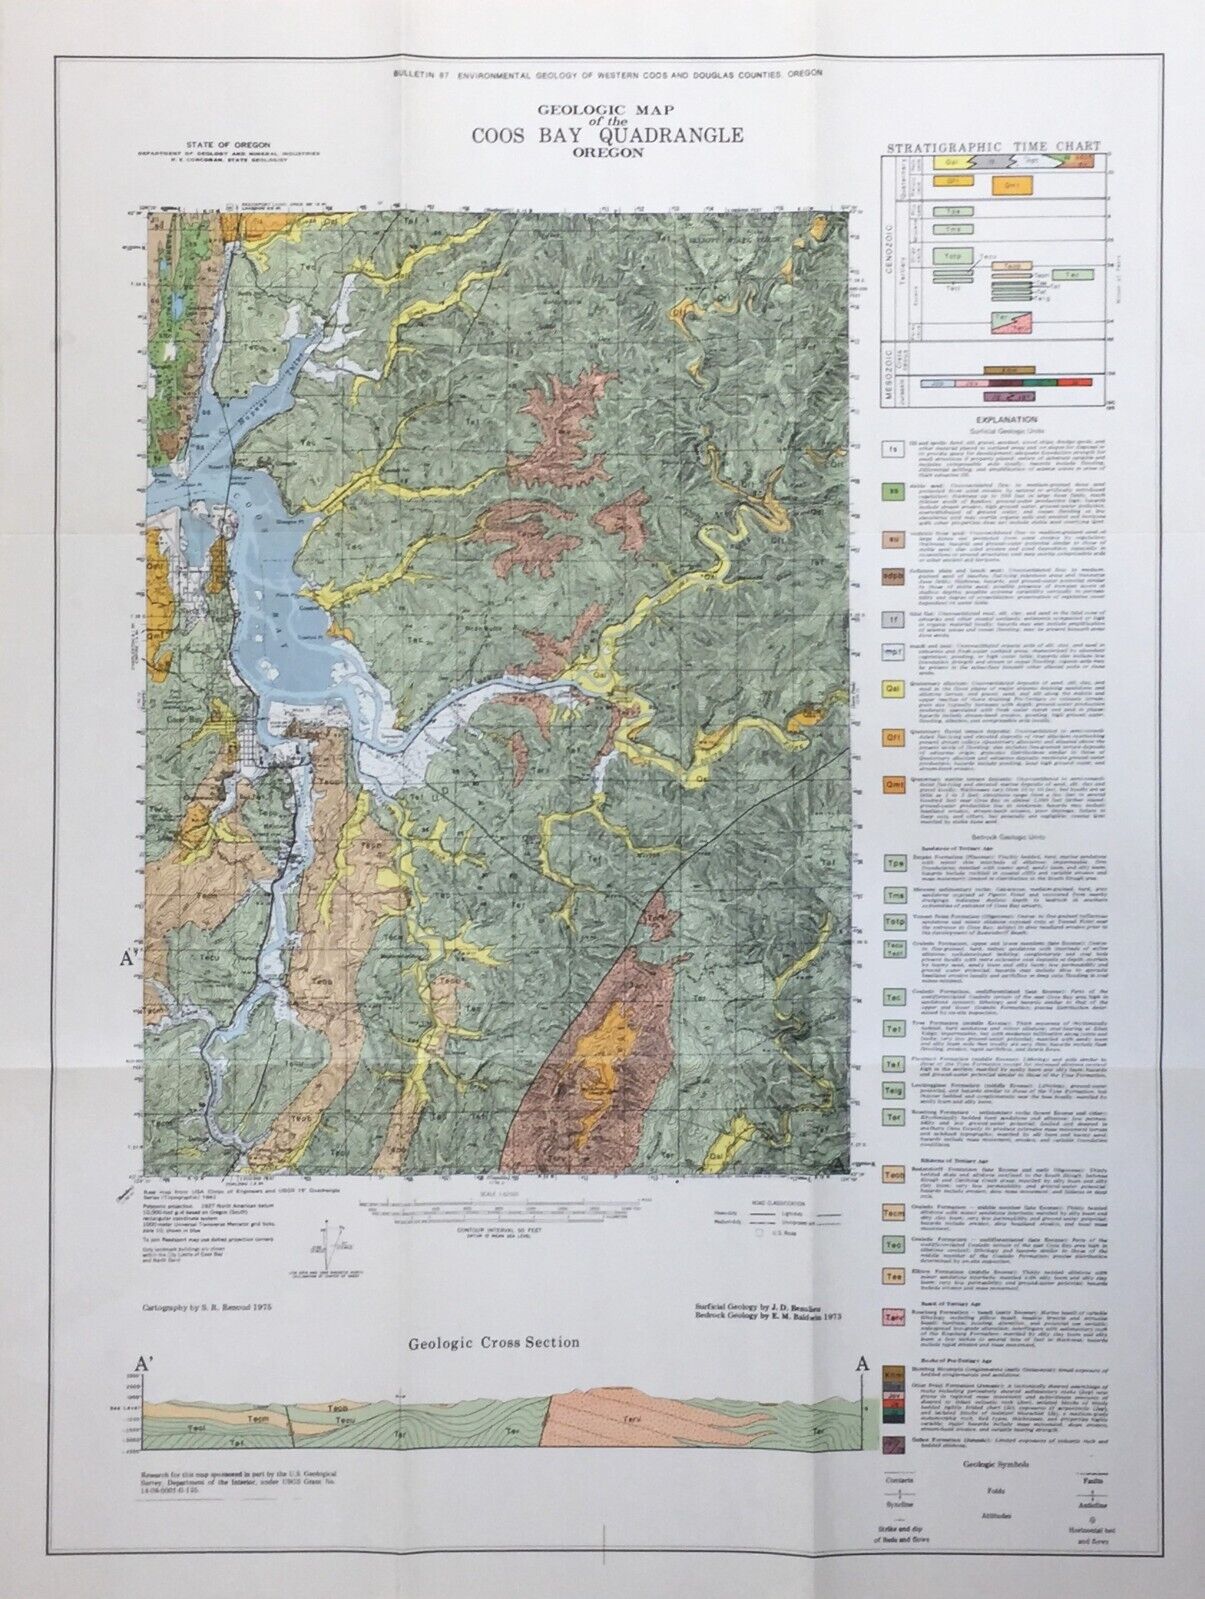 Coos Bay Oregon Quadrangle 1975 State Geologist Geologic Map